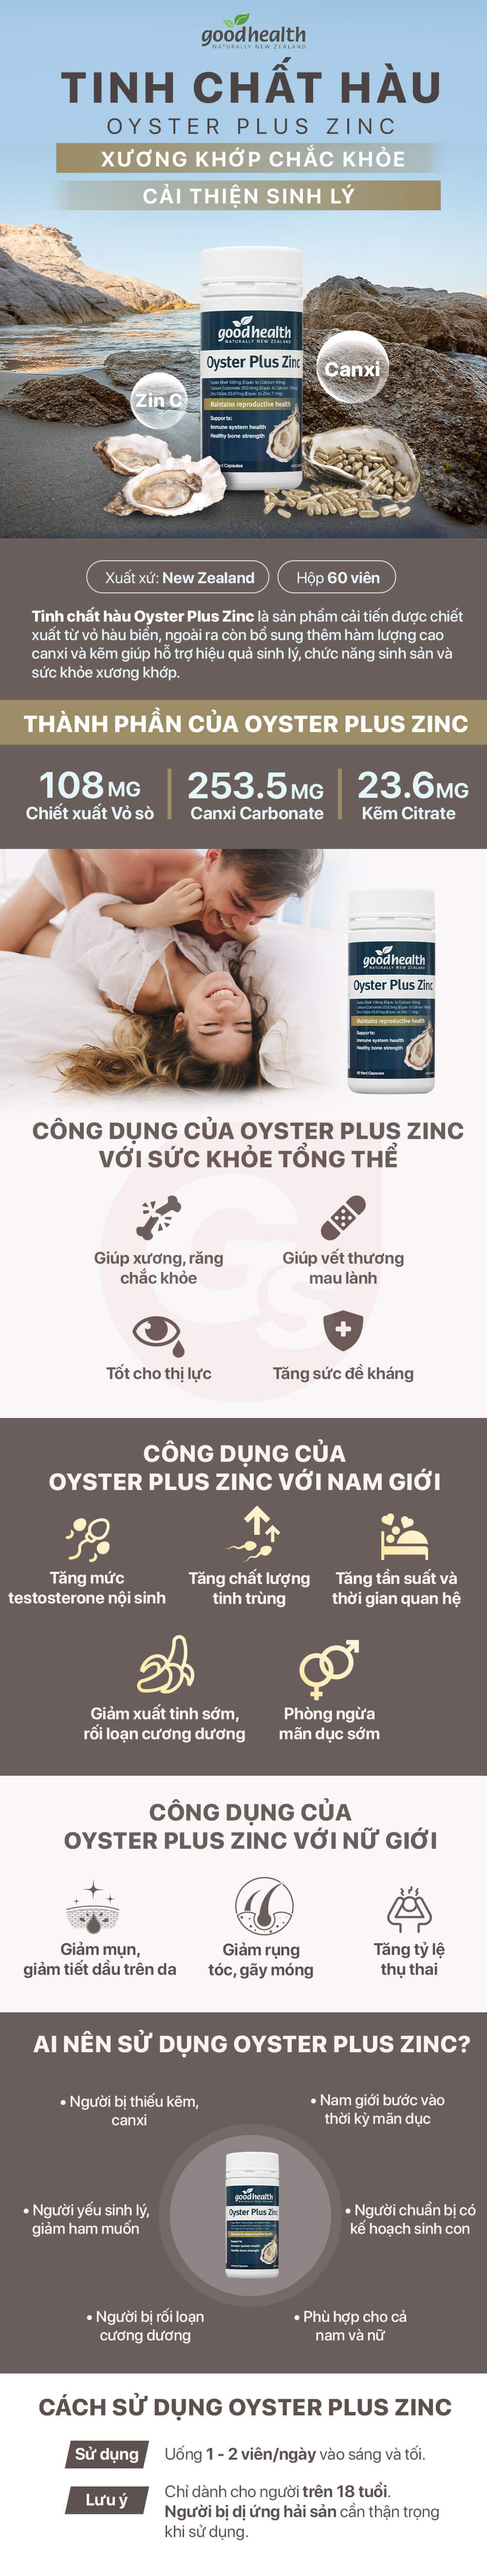 goodhealth-oyster-plus-zinc-cai-thien-sinh-ly-va-xuong-khop-gymstore